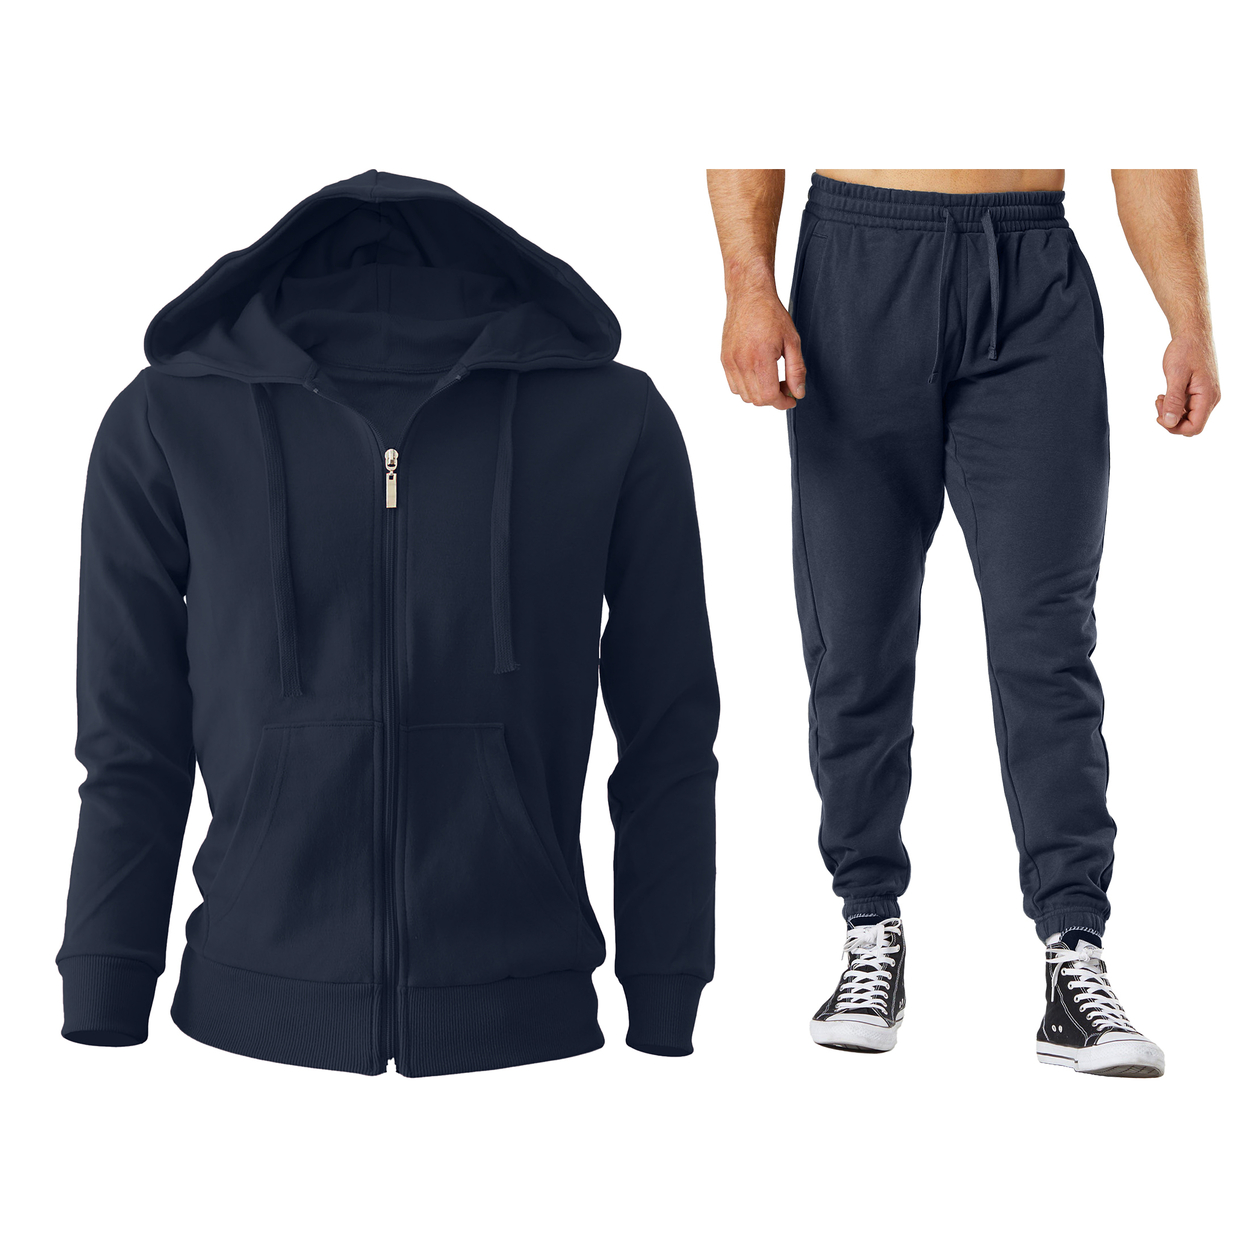 2/4-Piece: Men's Winter Warm Cozy Athletic Multi-Pockets BIG & TALL Sweatsuit Set - Navy, 1, Medium